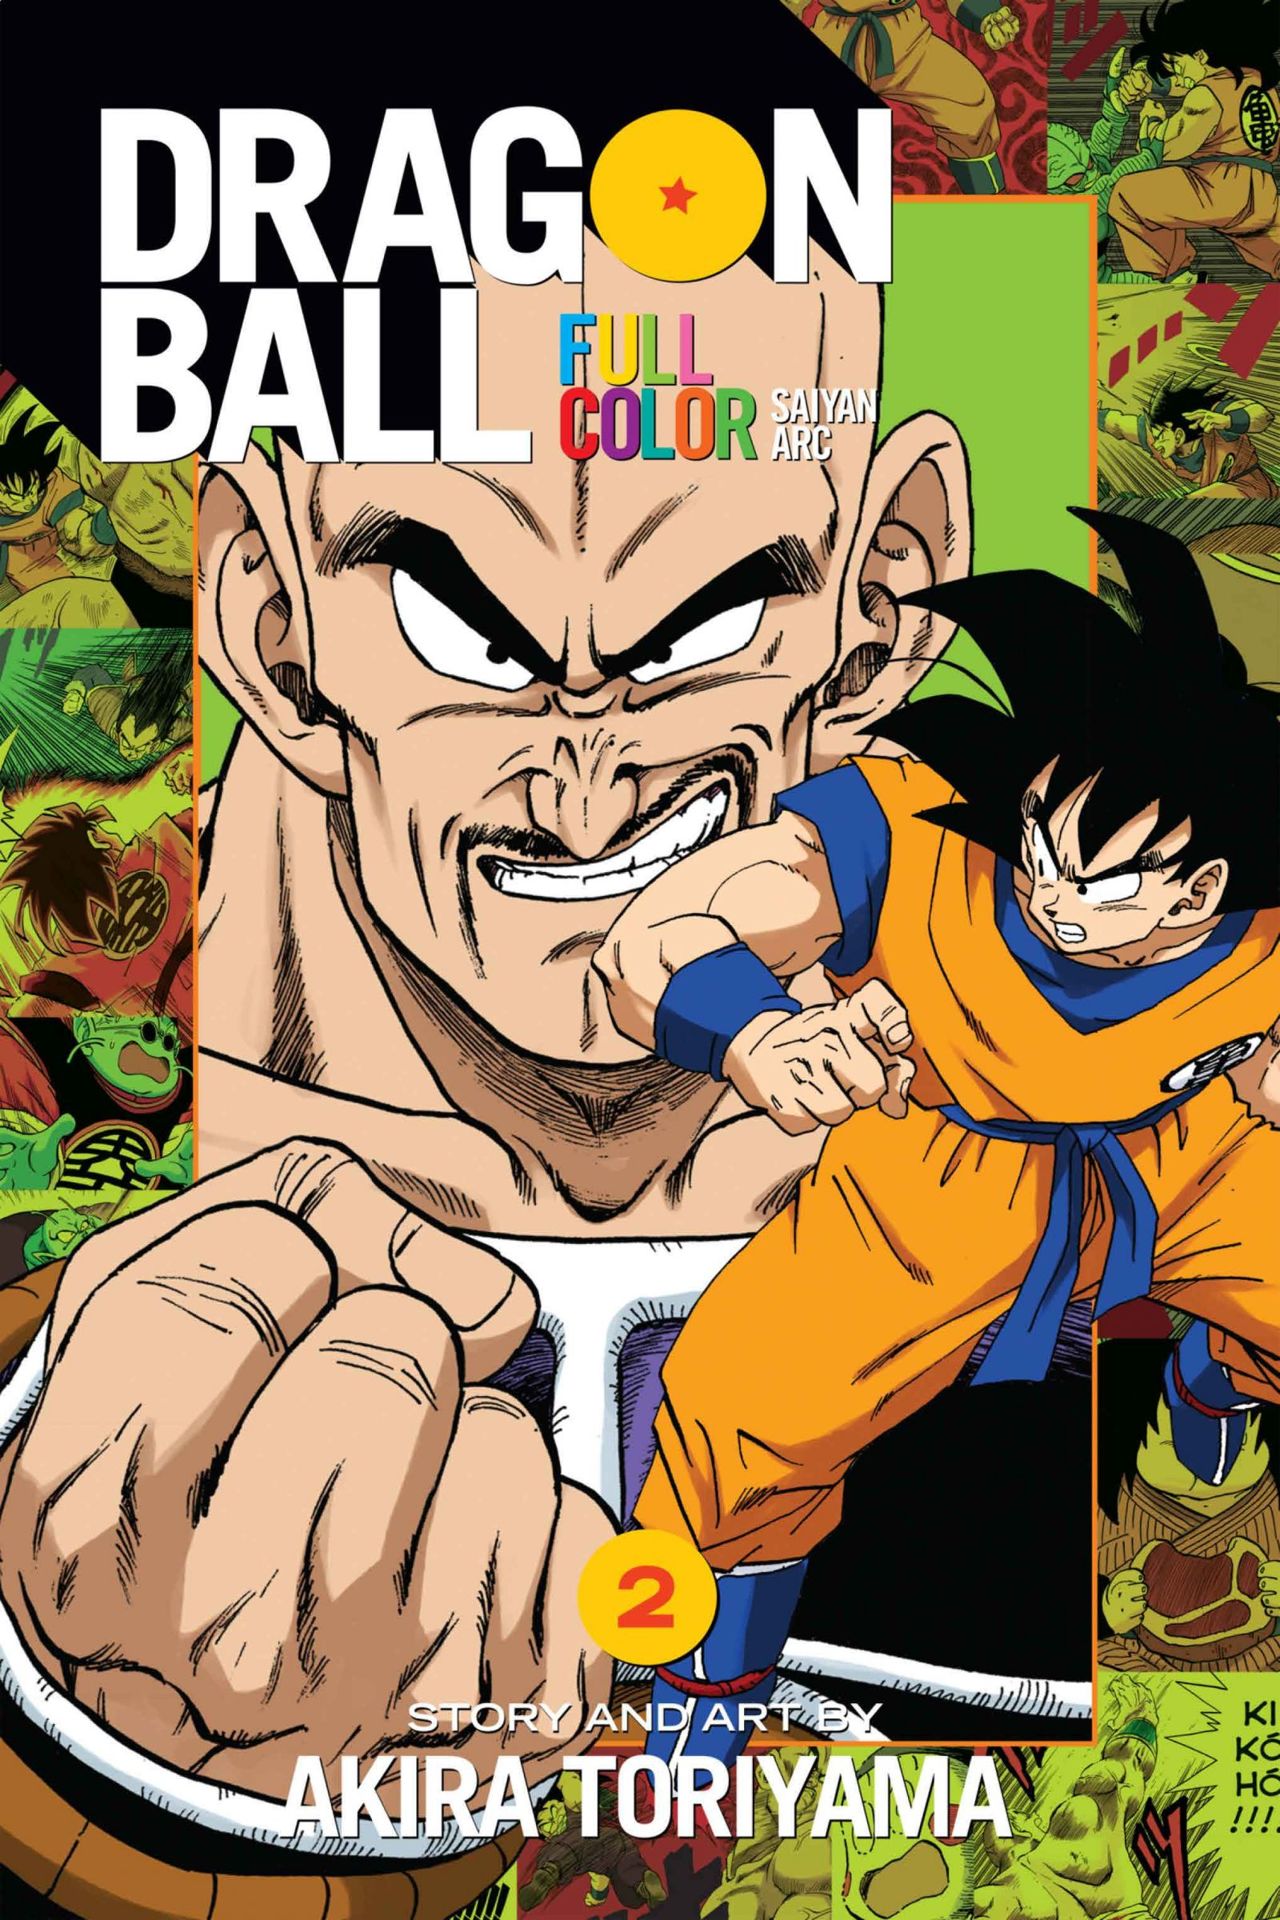 Manga Dragon Ball Z Full Color 02 Online - InManga